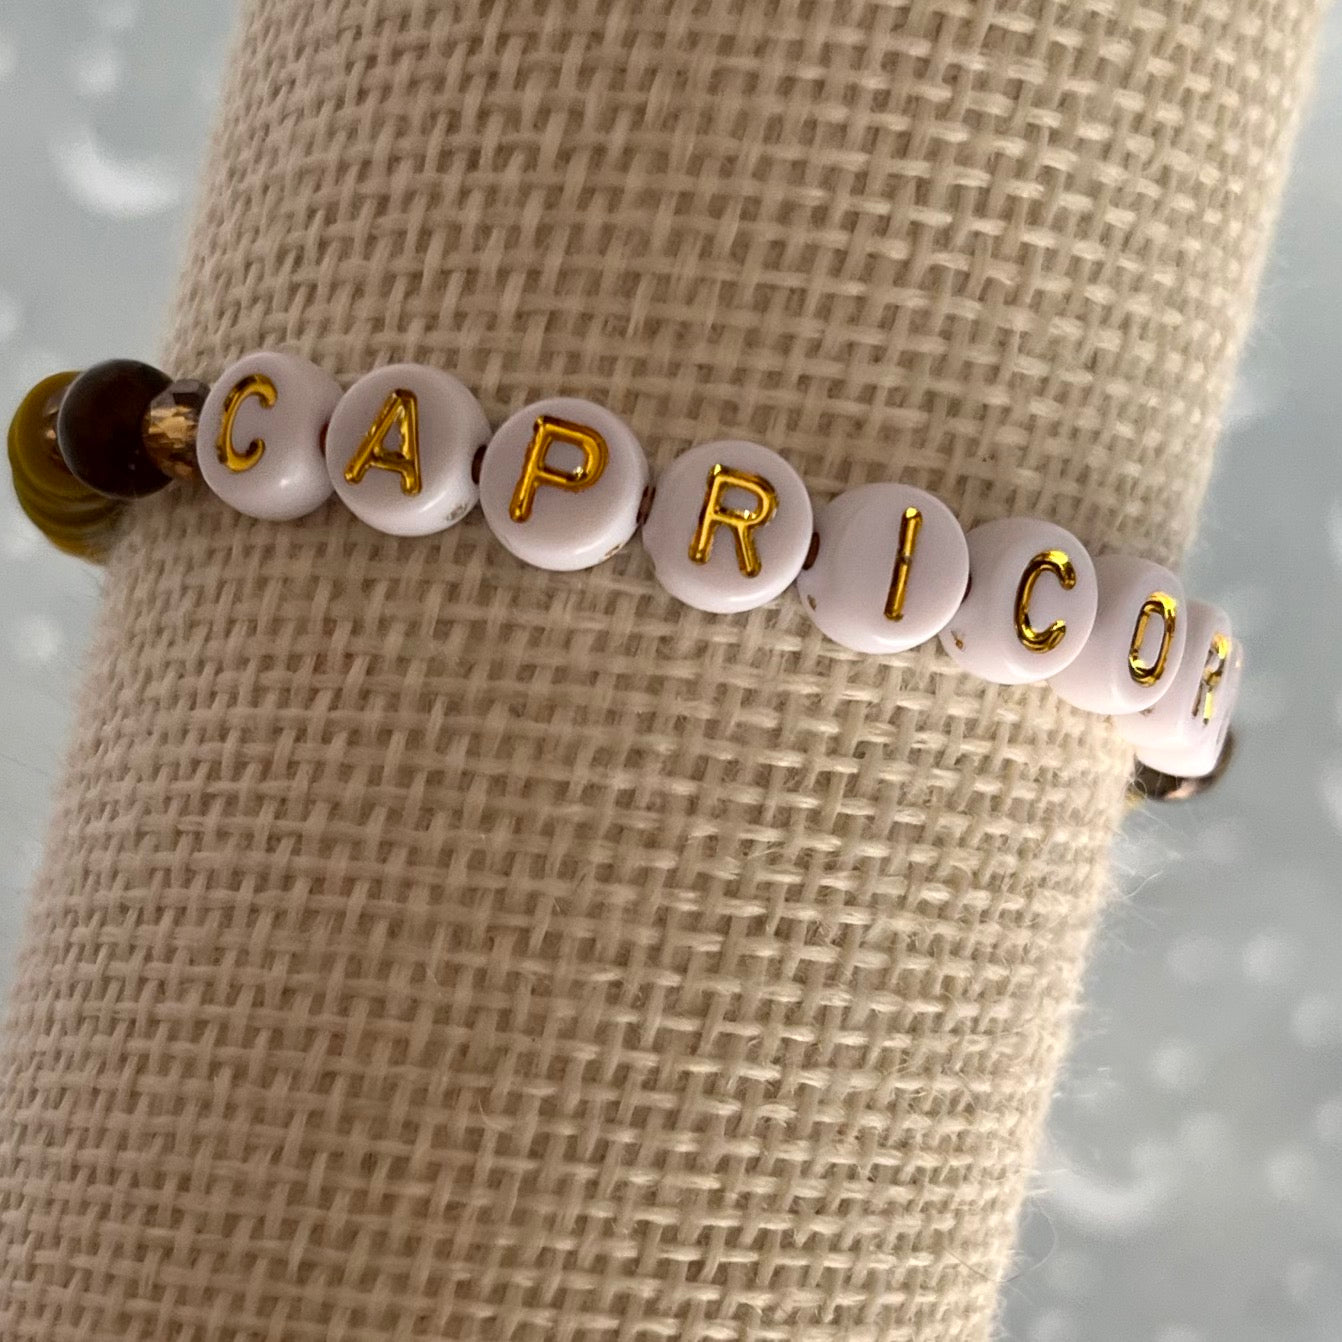 Capricorn Zodiac Bracelet: Rose Gold Letter beads with yellow jade